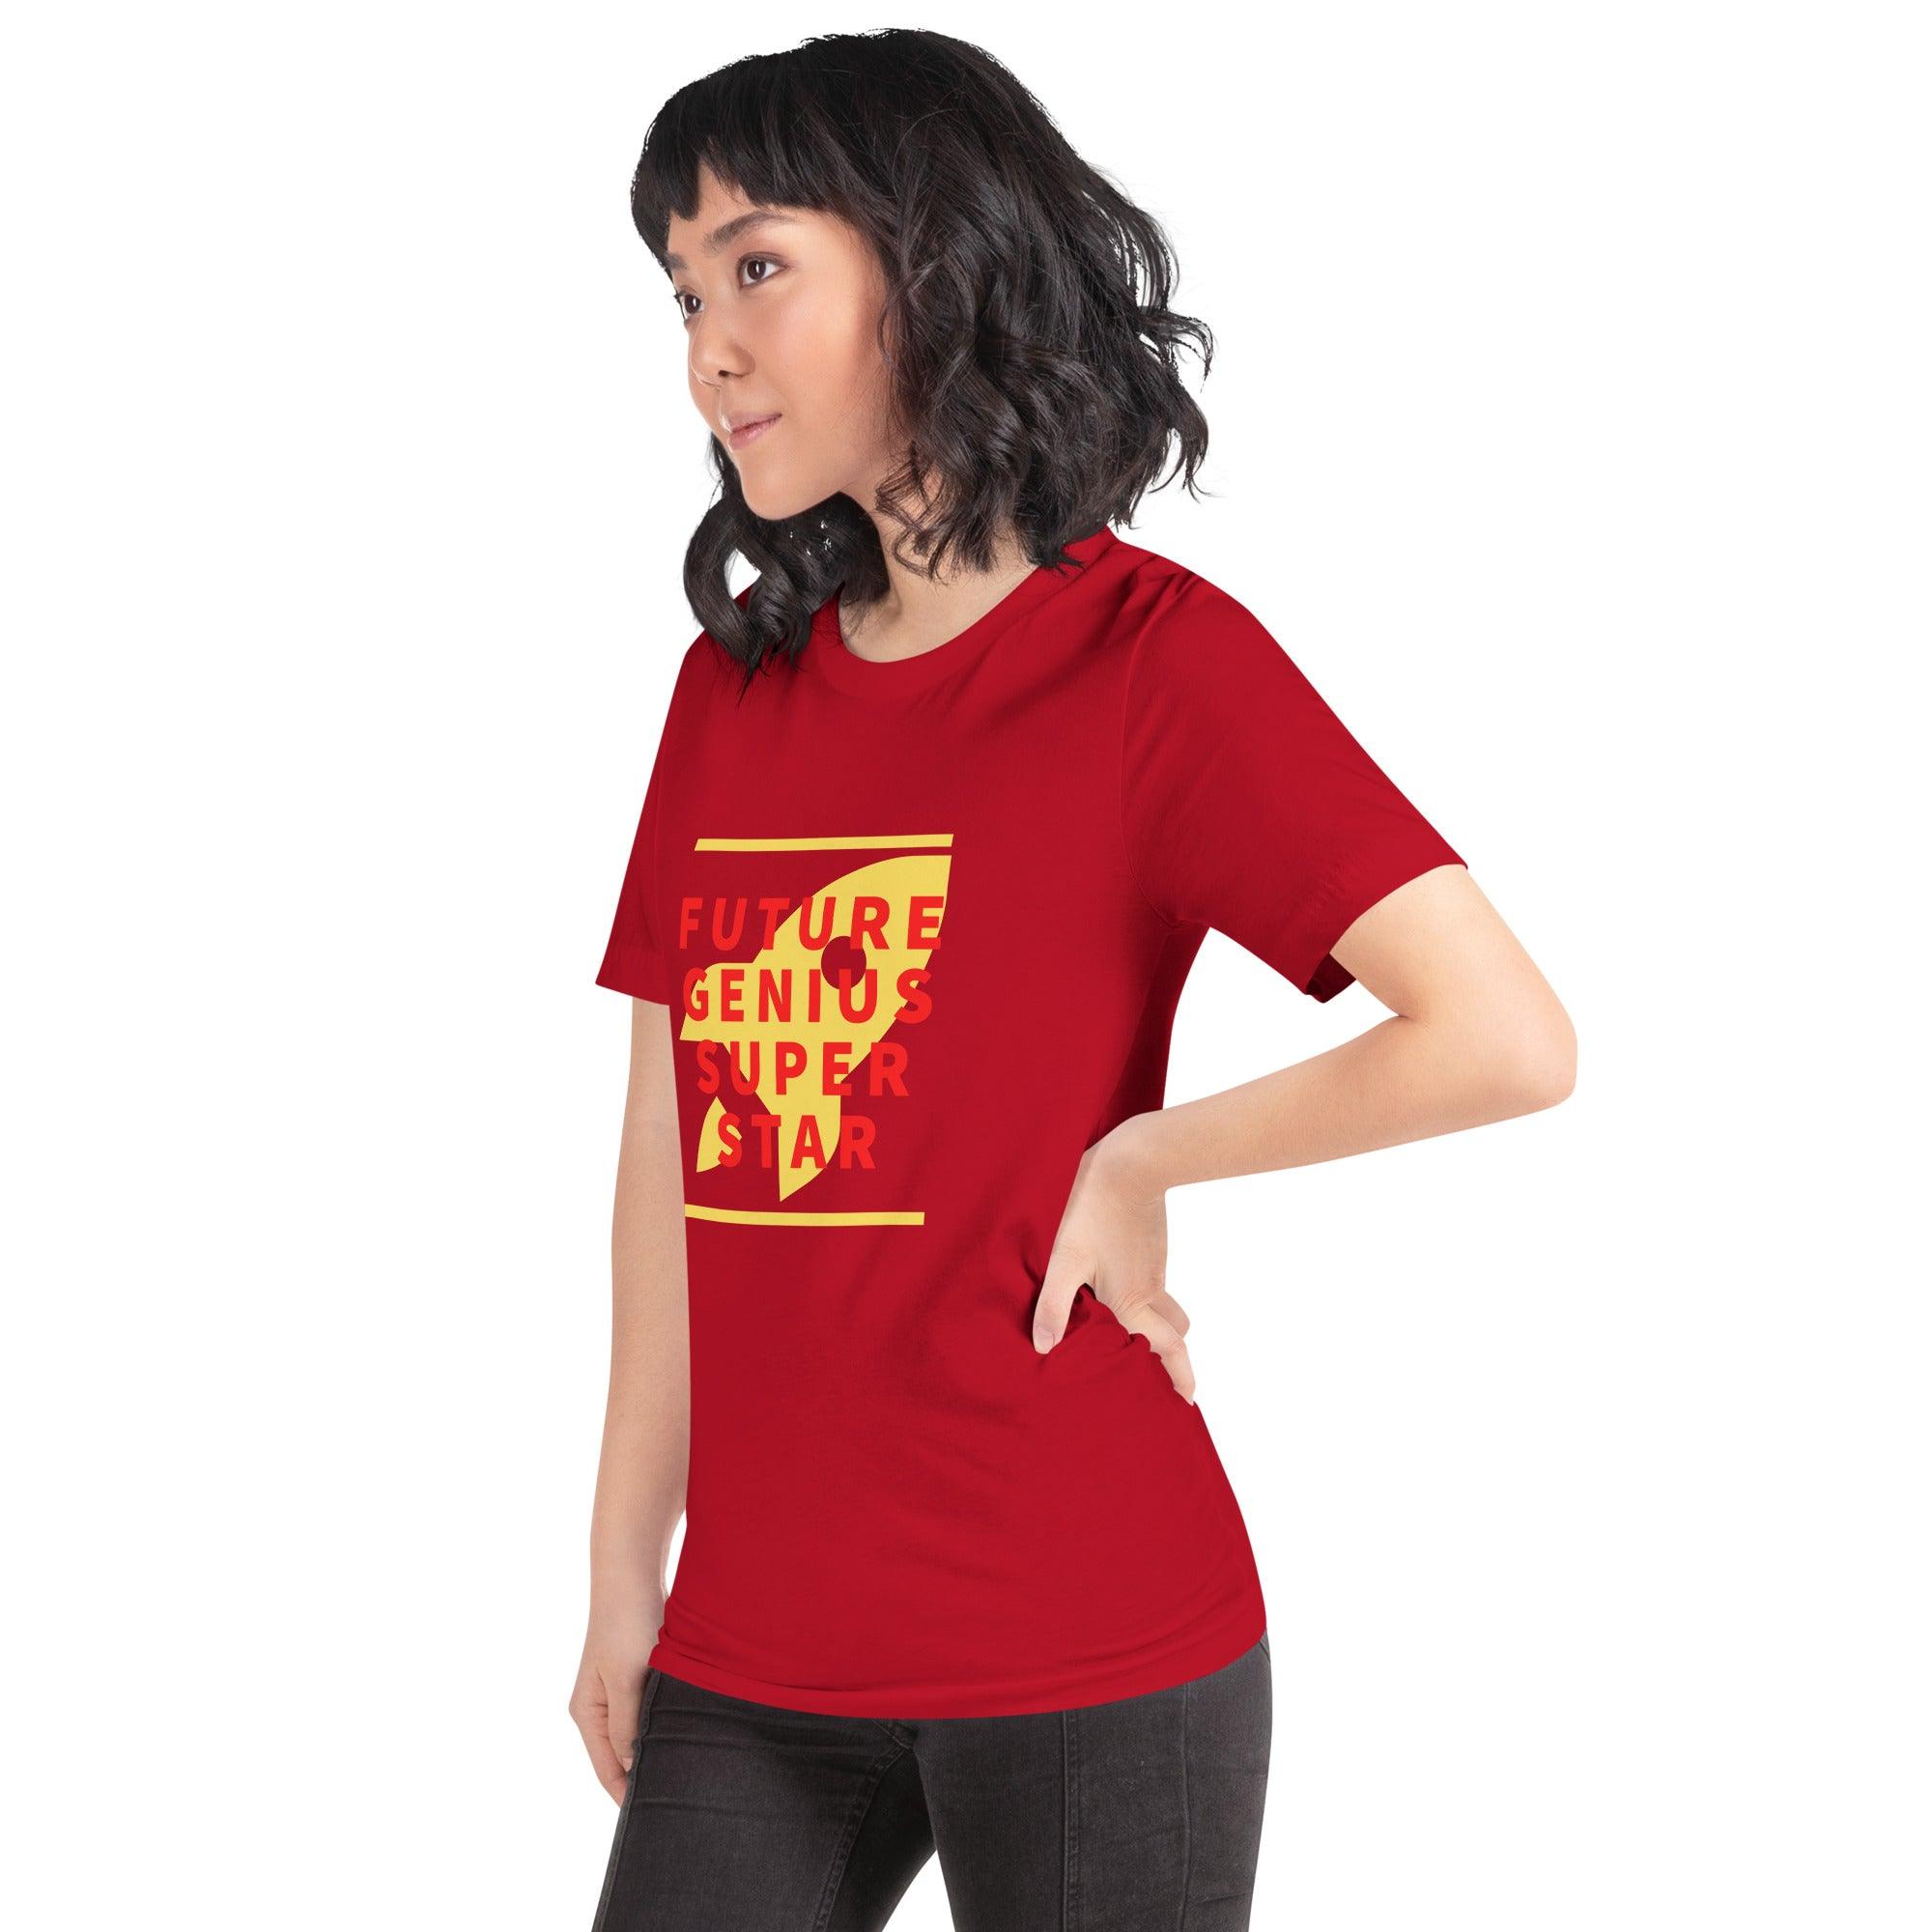 Future Genius Super Star Premium Short-Sleeve Women's T-Shirt - Affirm Effect